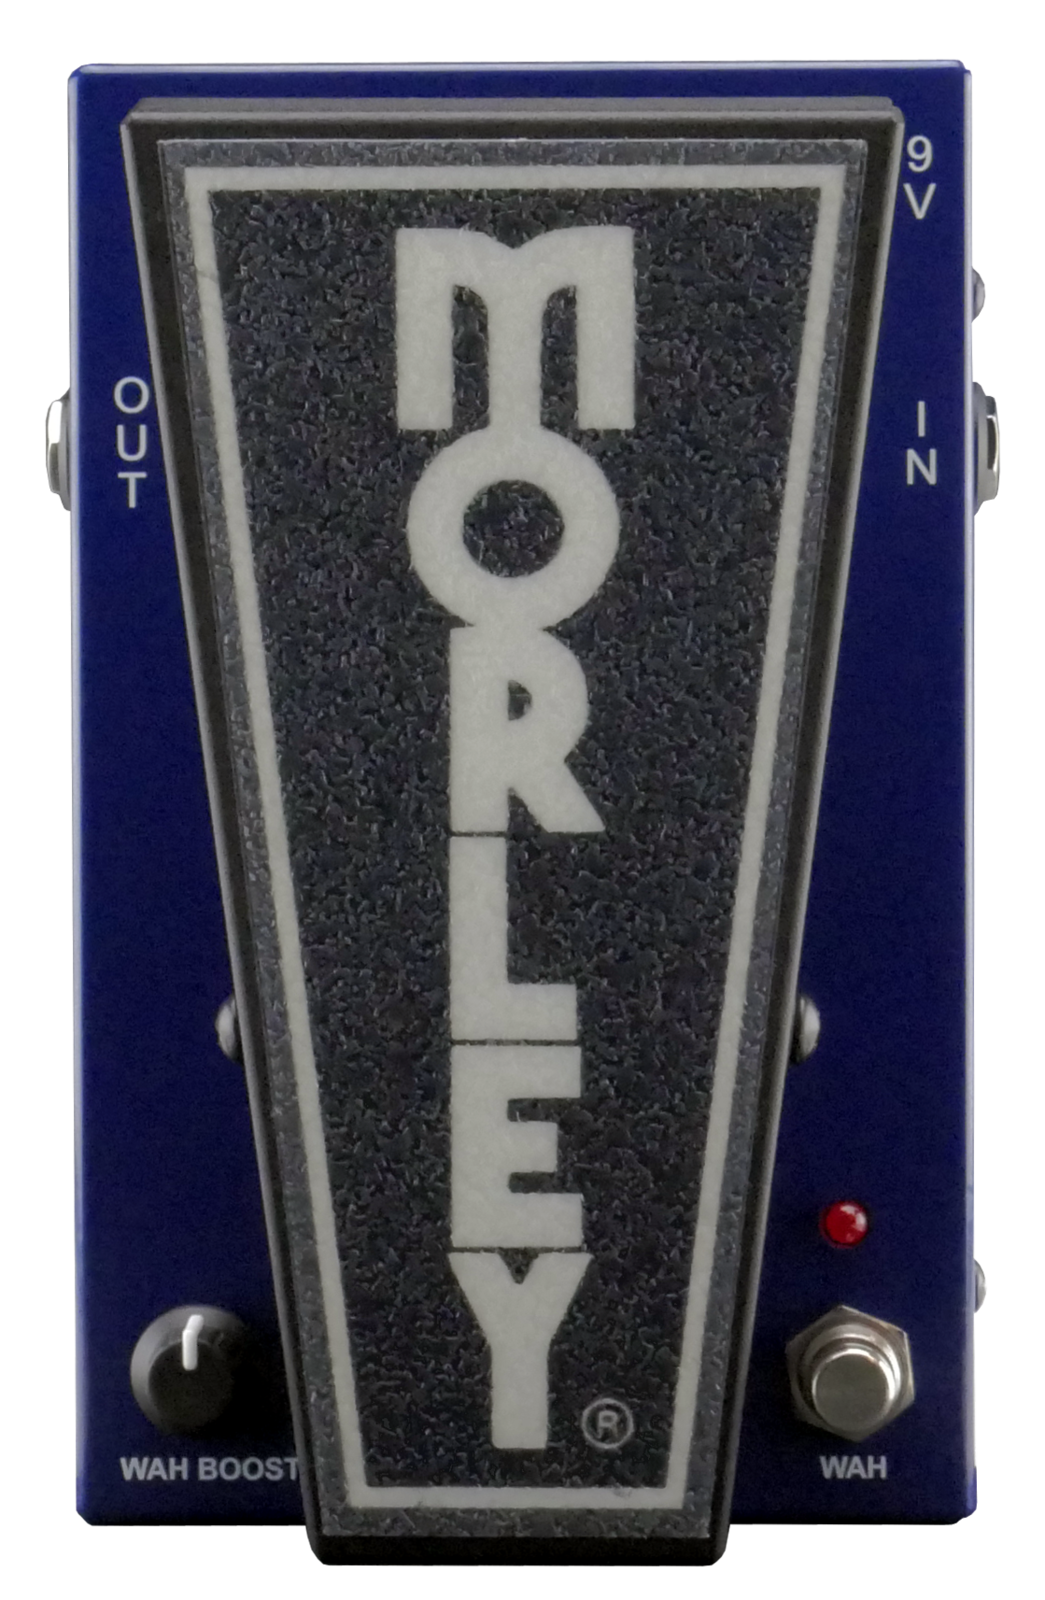 Morley 20/20 Power Wah Pedal